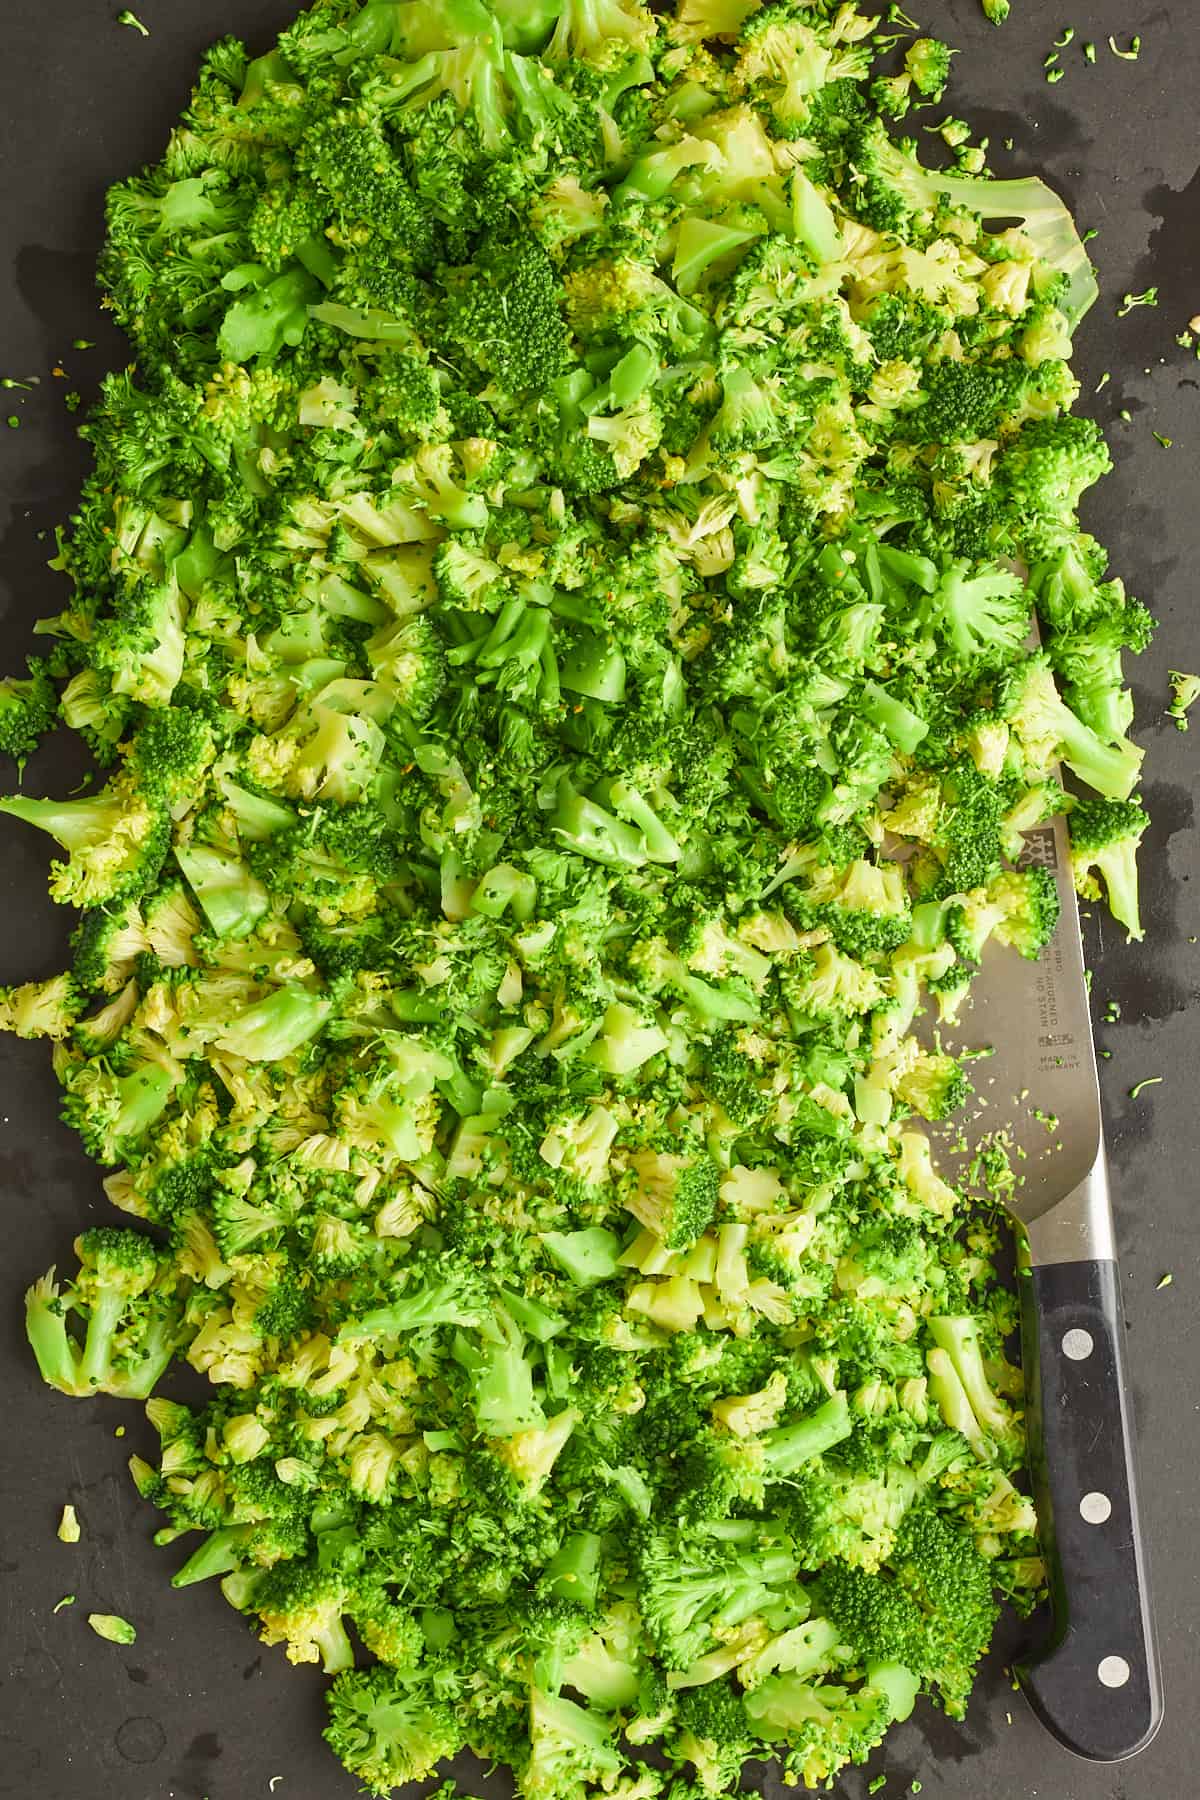 Chopped broccoli florets. 